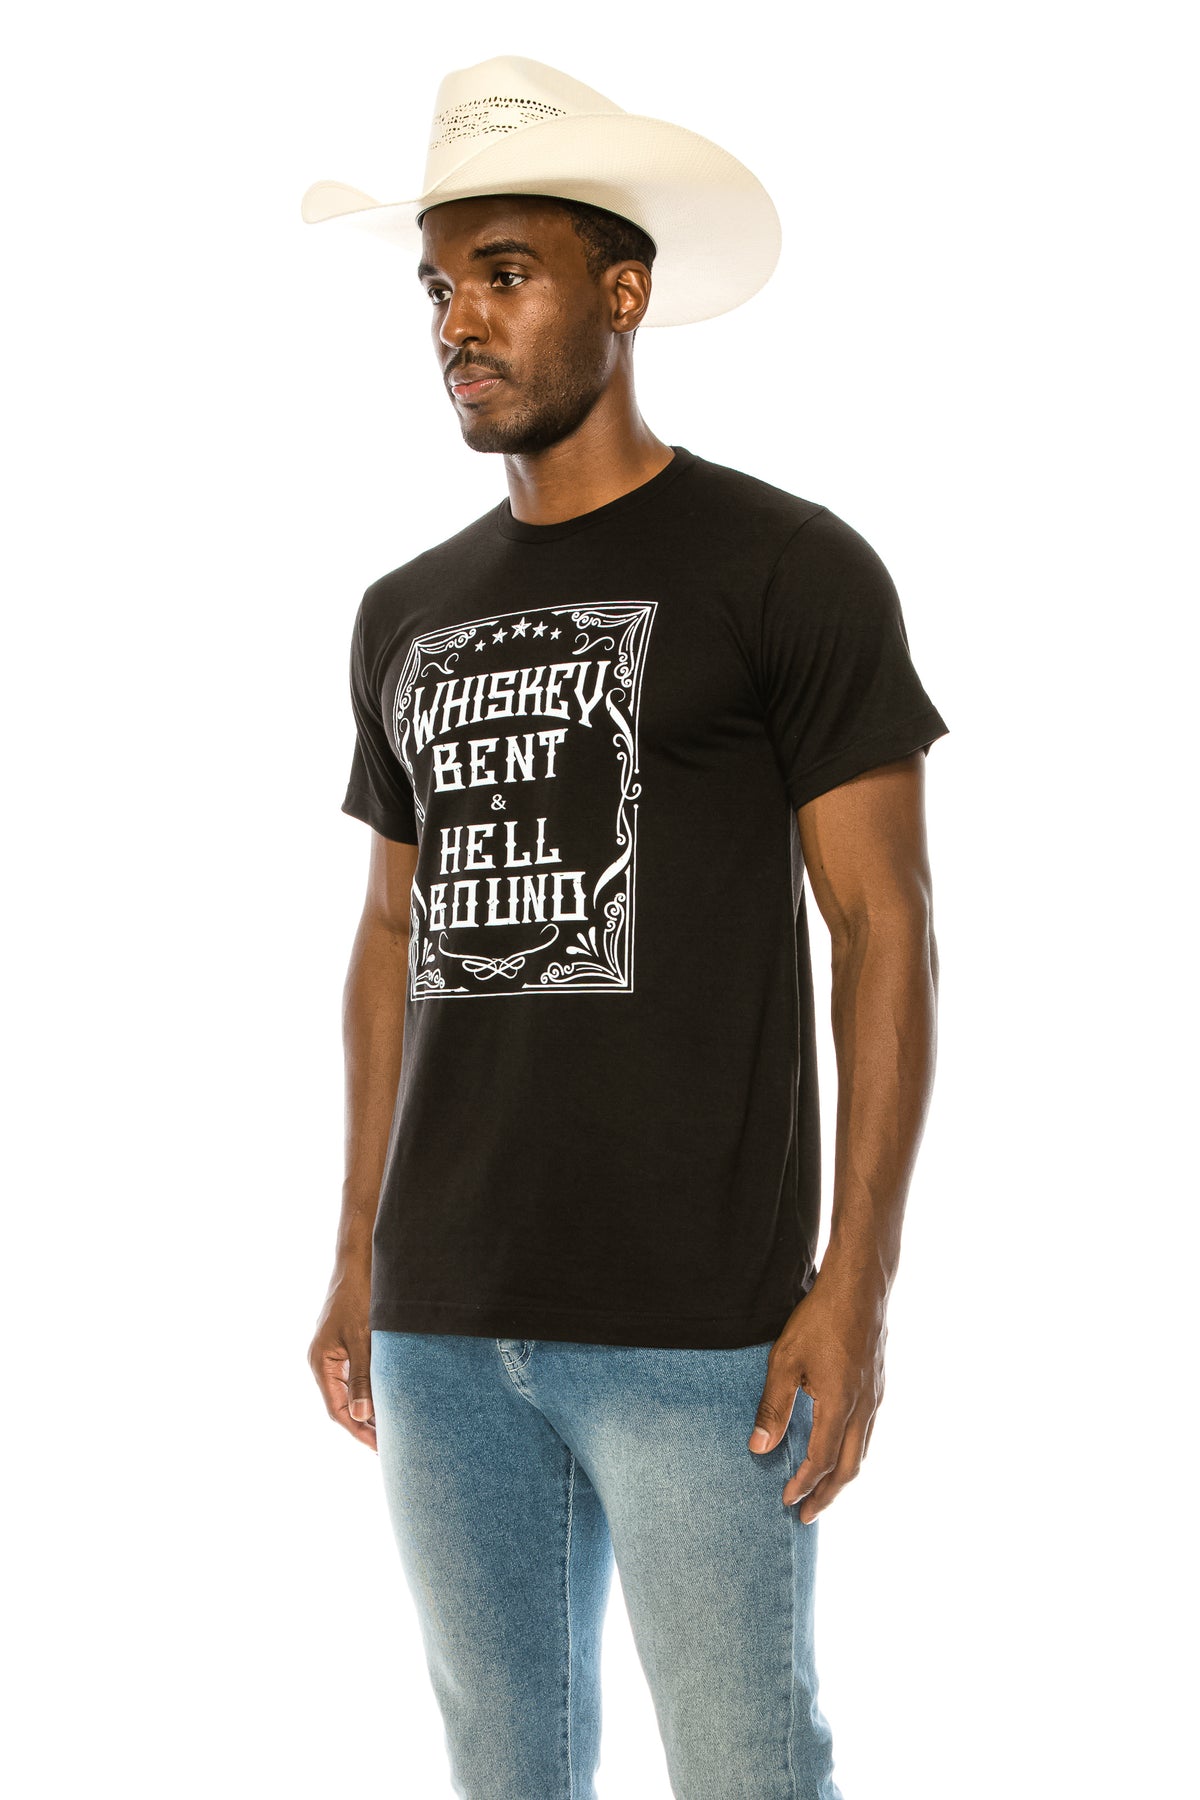 Whiskey Bent and Hell Bound Shirt | Rocker T Shirt - Men's ...